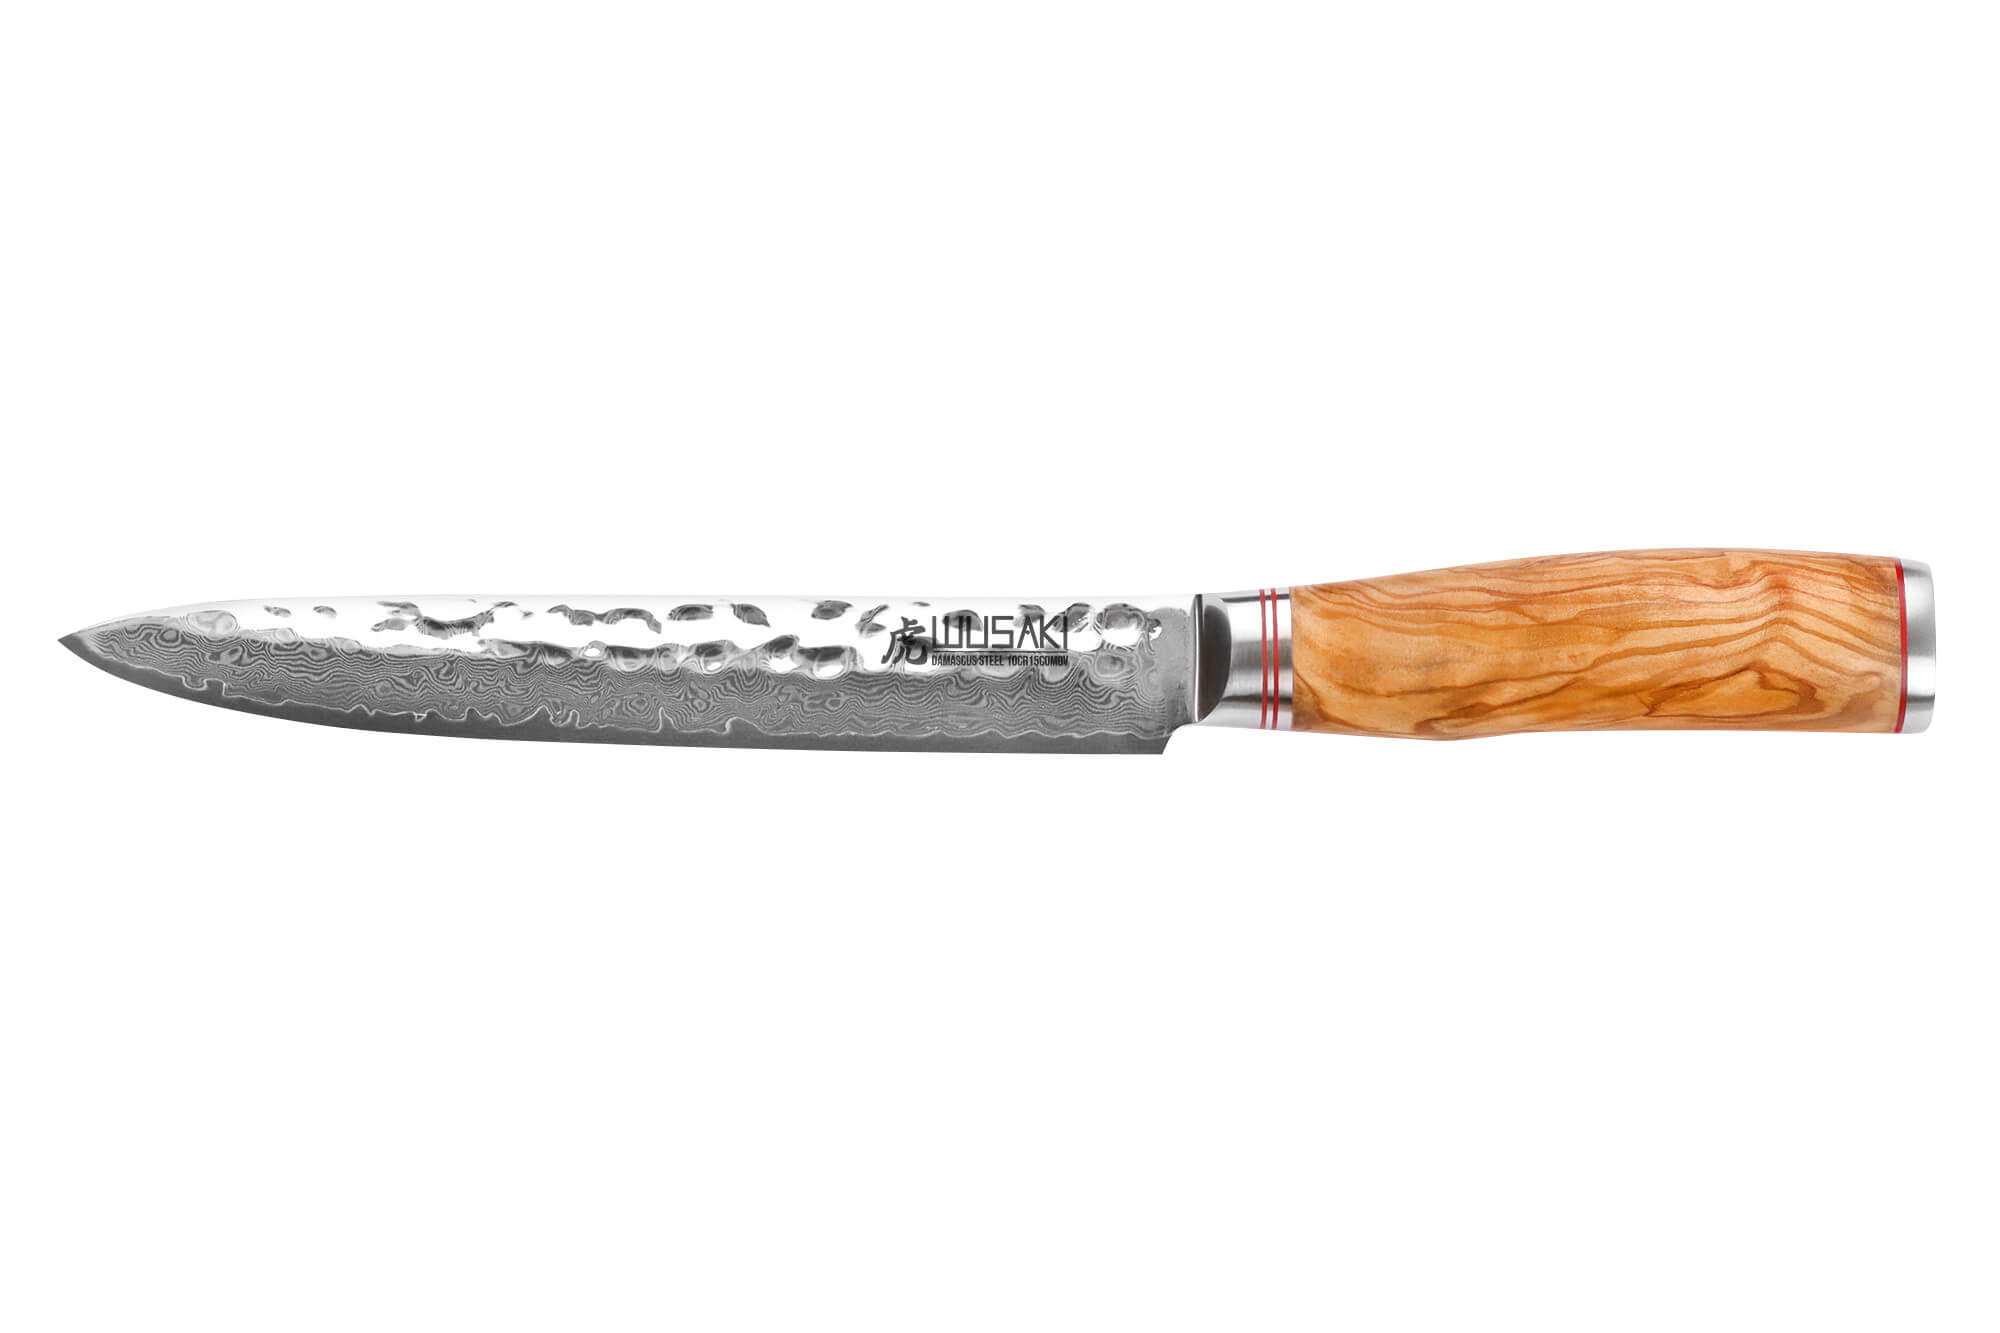 Couteaux à fromage blanc 20 cm - Coutellerie Henry